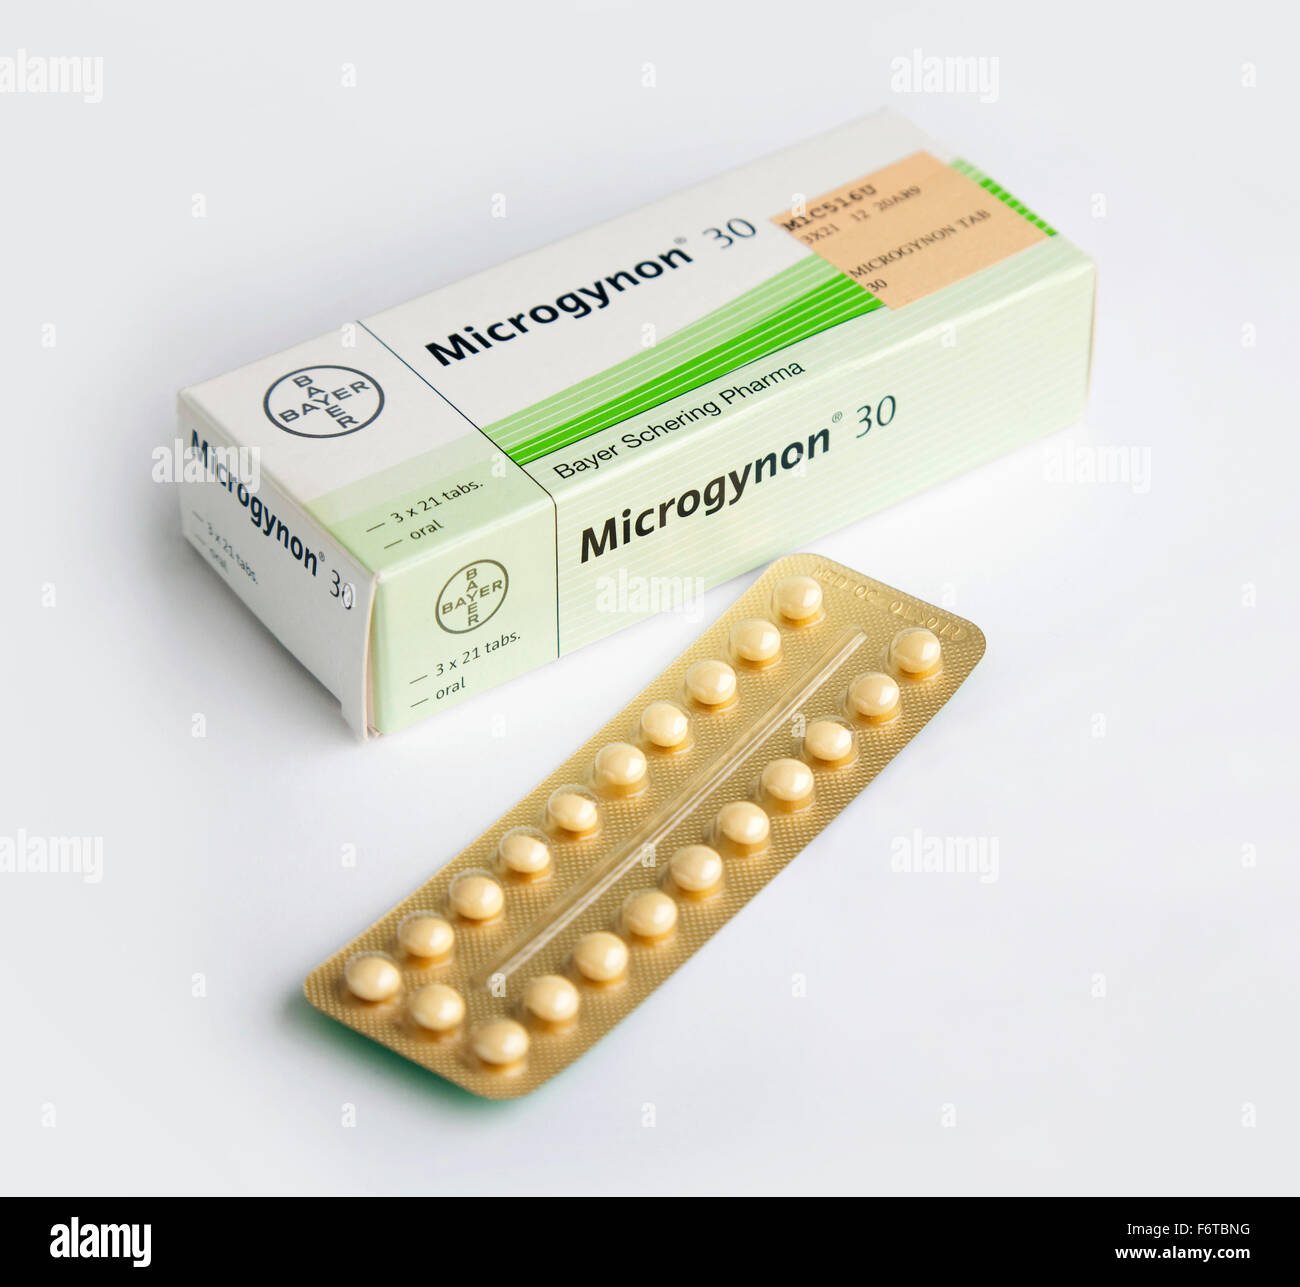 Microgynon 30 Contraceptive Pills Stock Photo